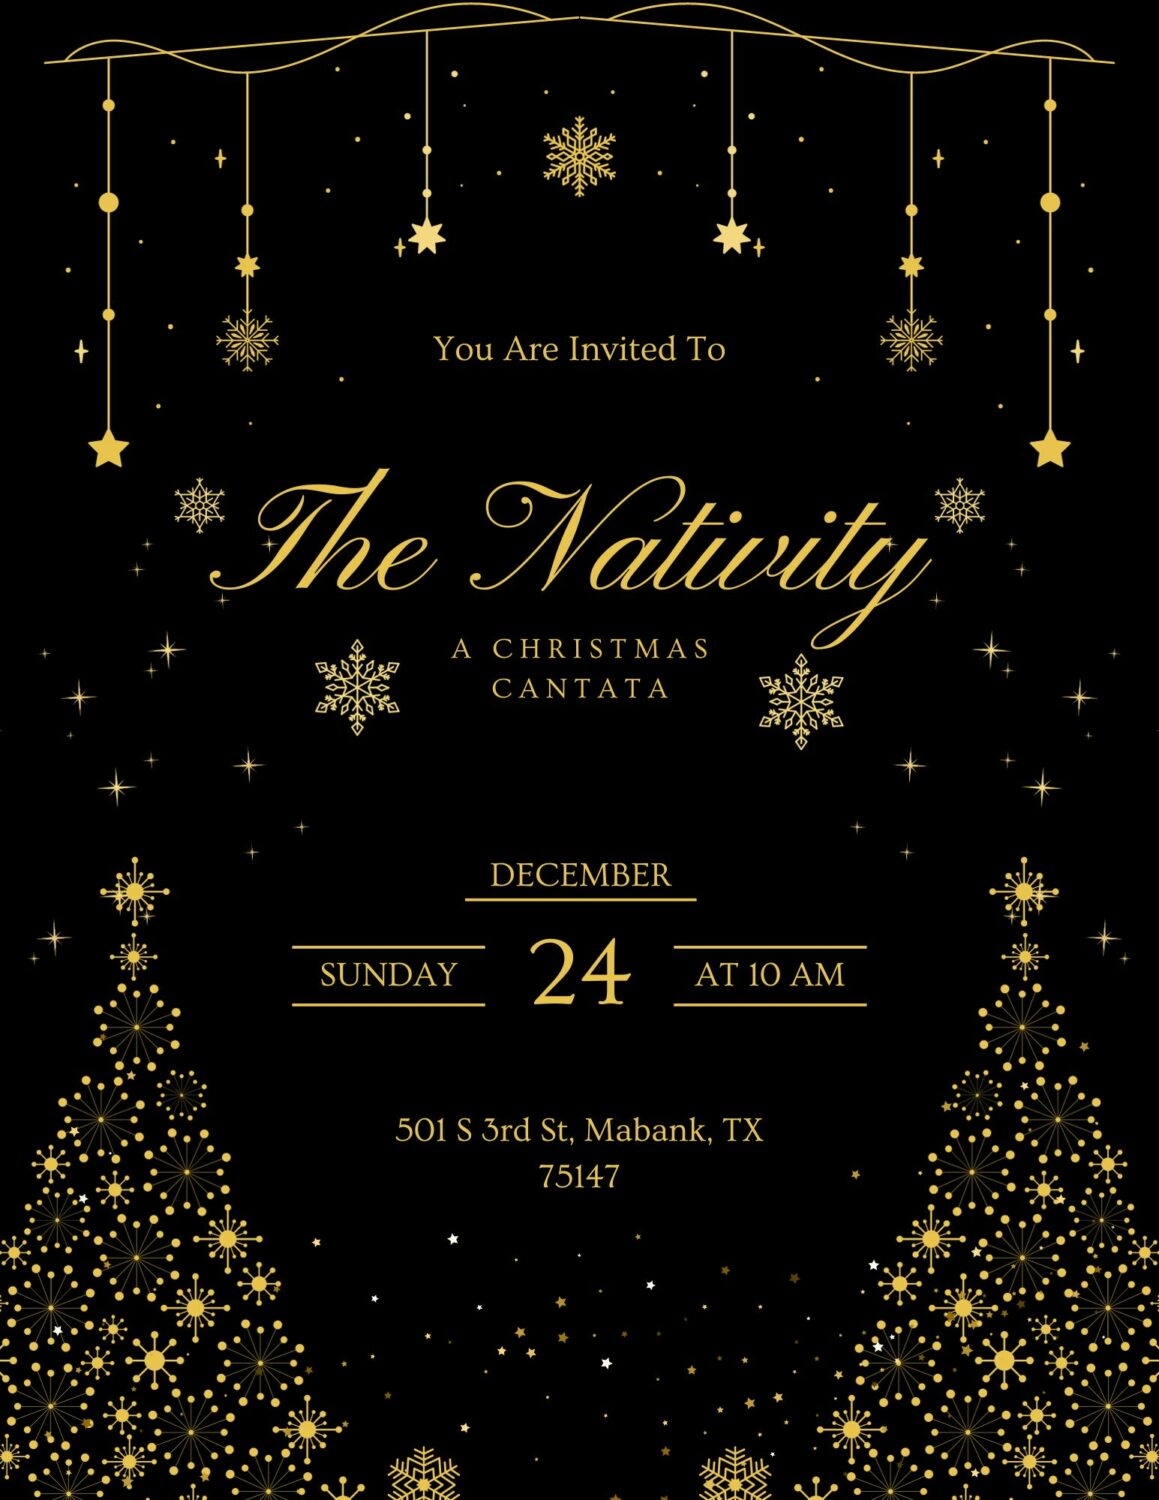 The Nativity: A Christmas Cantata 2 The Nativity cedarcreeklake.online